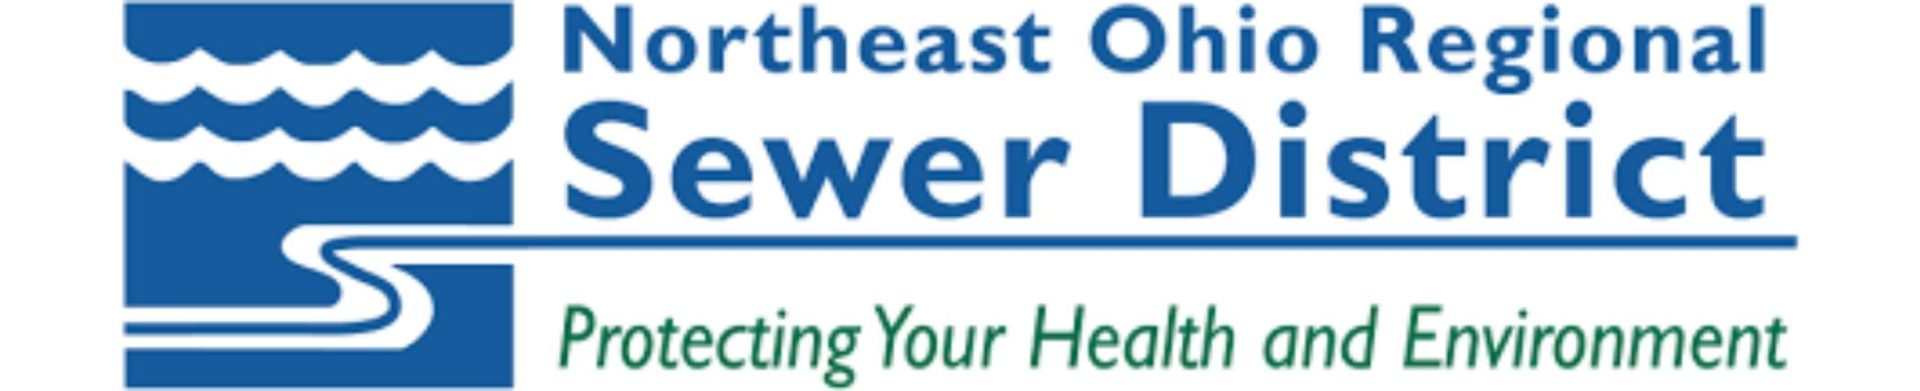 Northeast Ohio Regional Sewer District logo